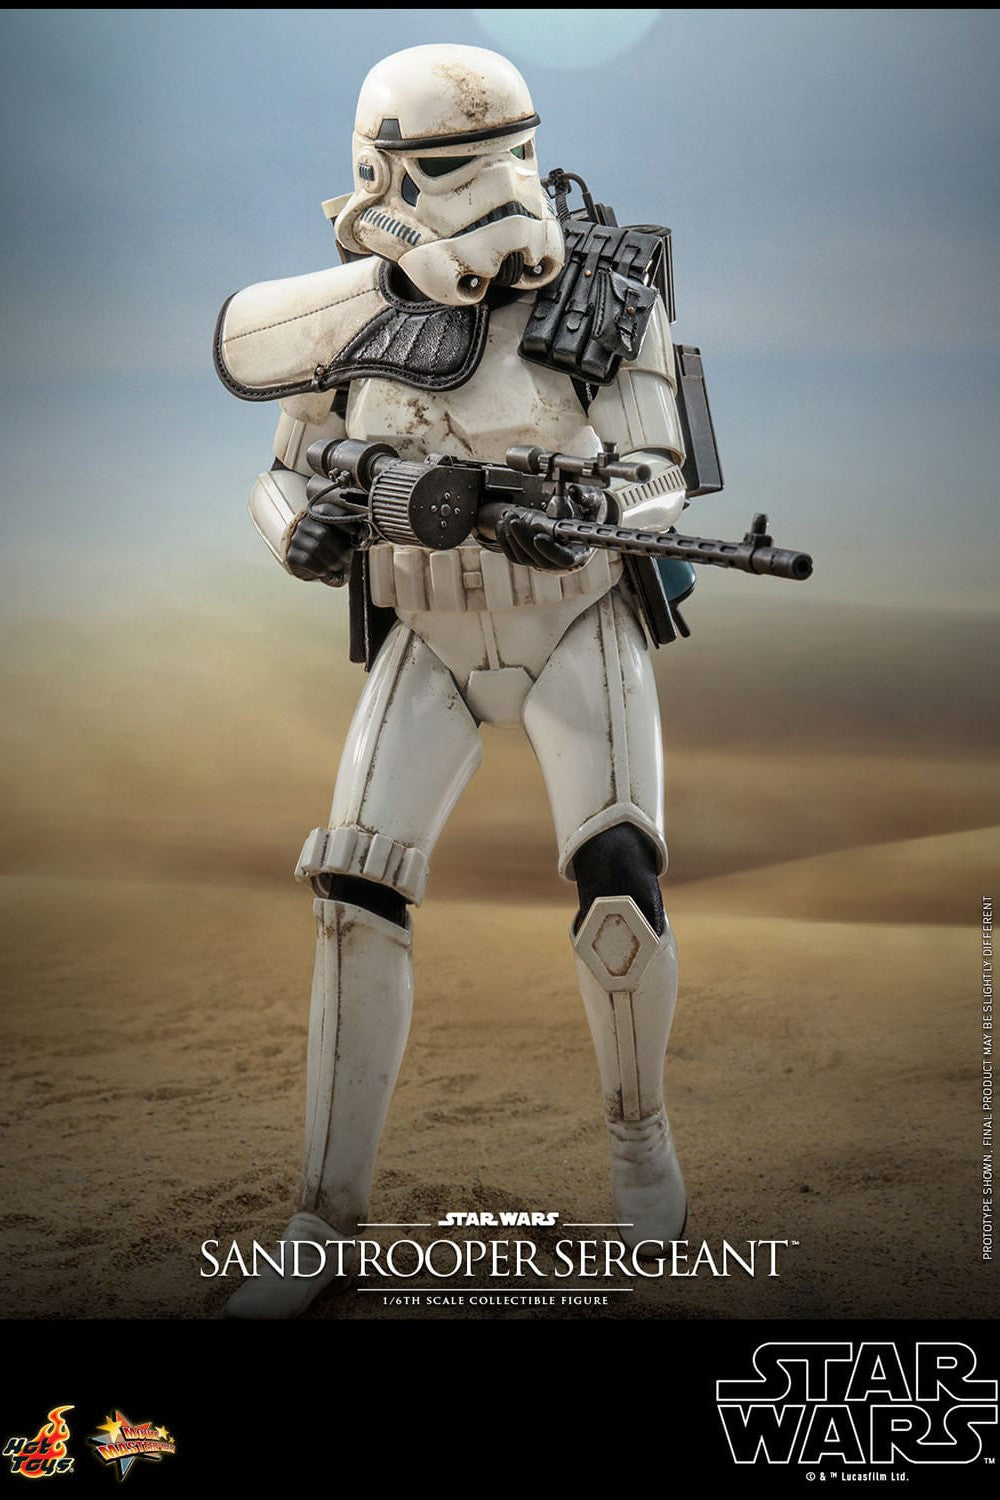 Sandtrooper Sergeant: Star Wars: A New Hope: Hot Toys